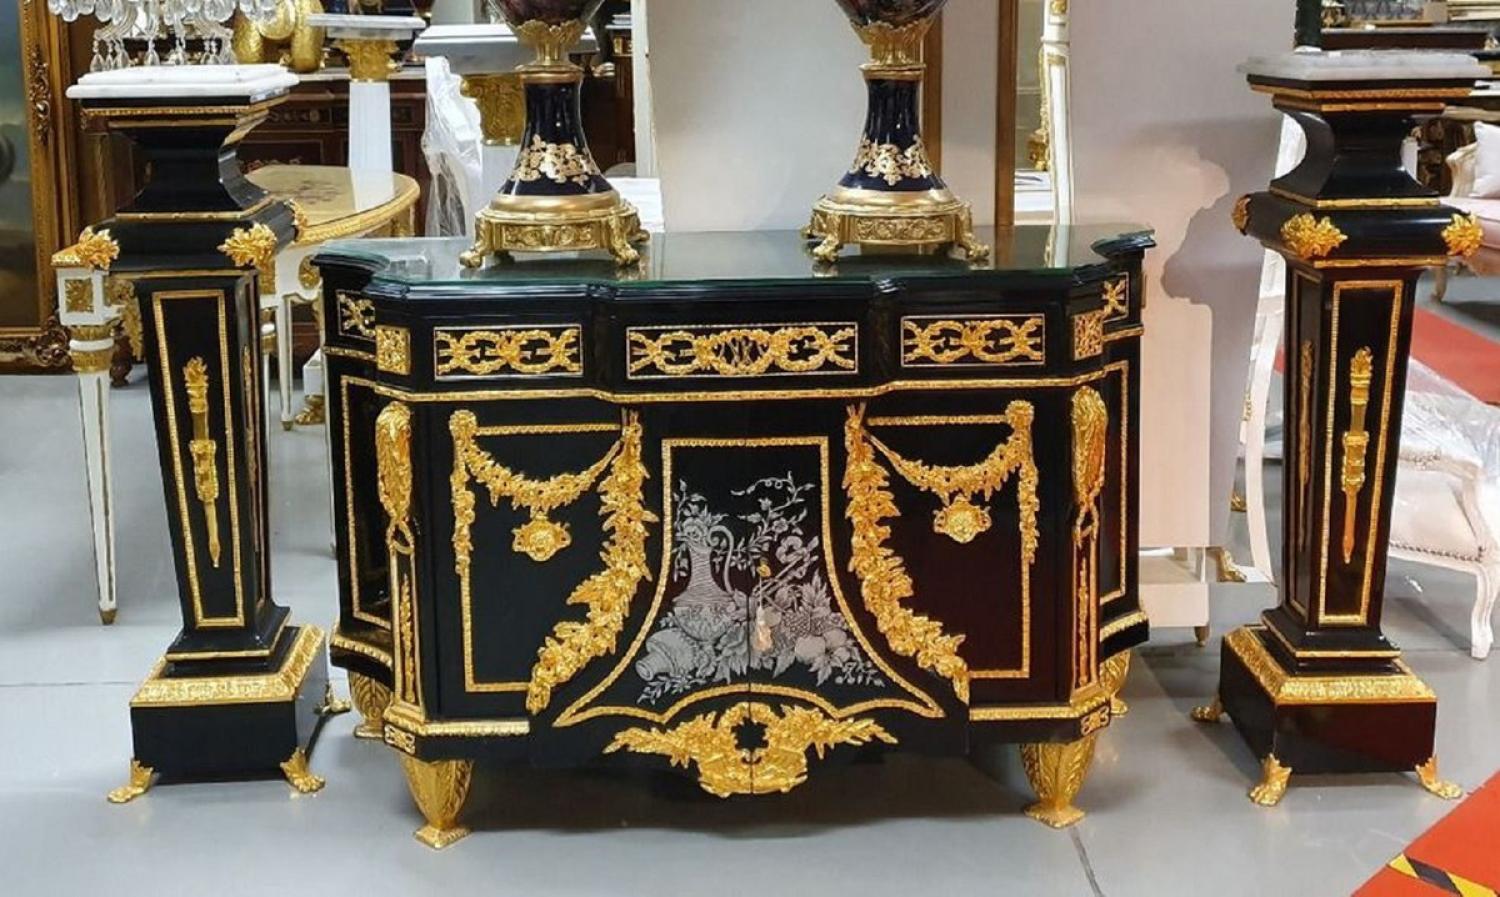 Casa Padrino Luxus Barock Möbel Set Schwarz / Gold - 1 Barock Kommode und 2 Barock Säulen - Prunkvolle Barock Möbel Bild 1